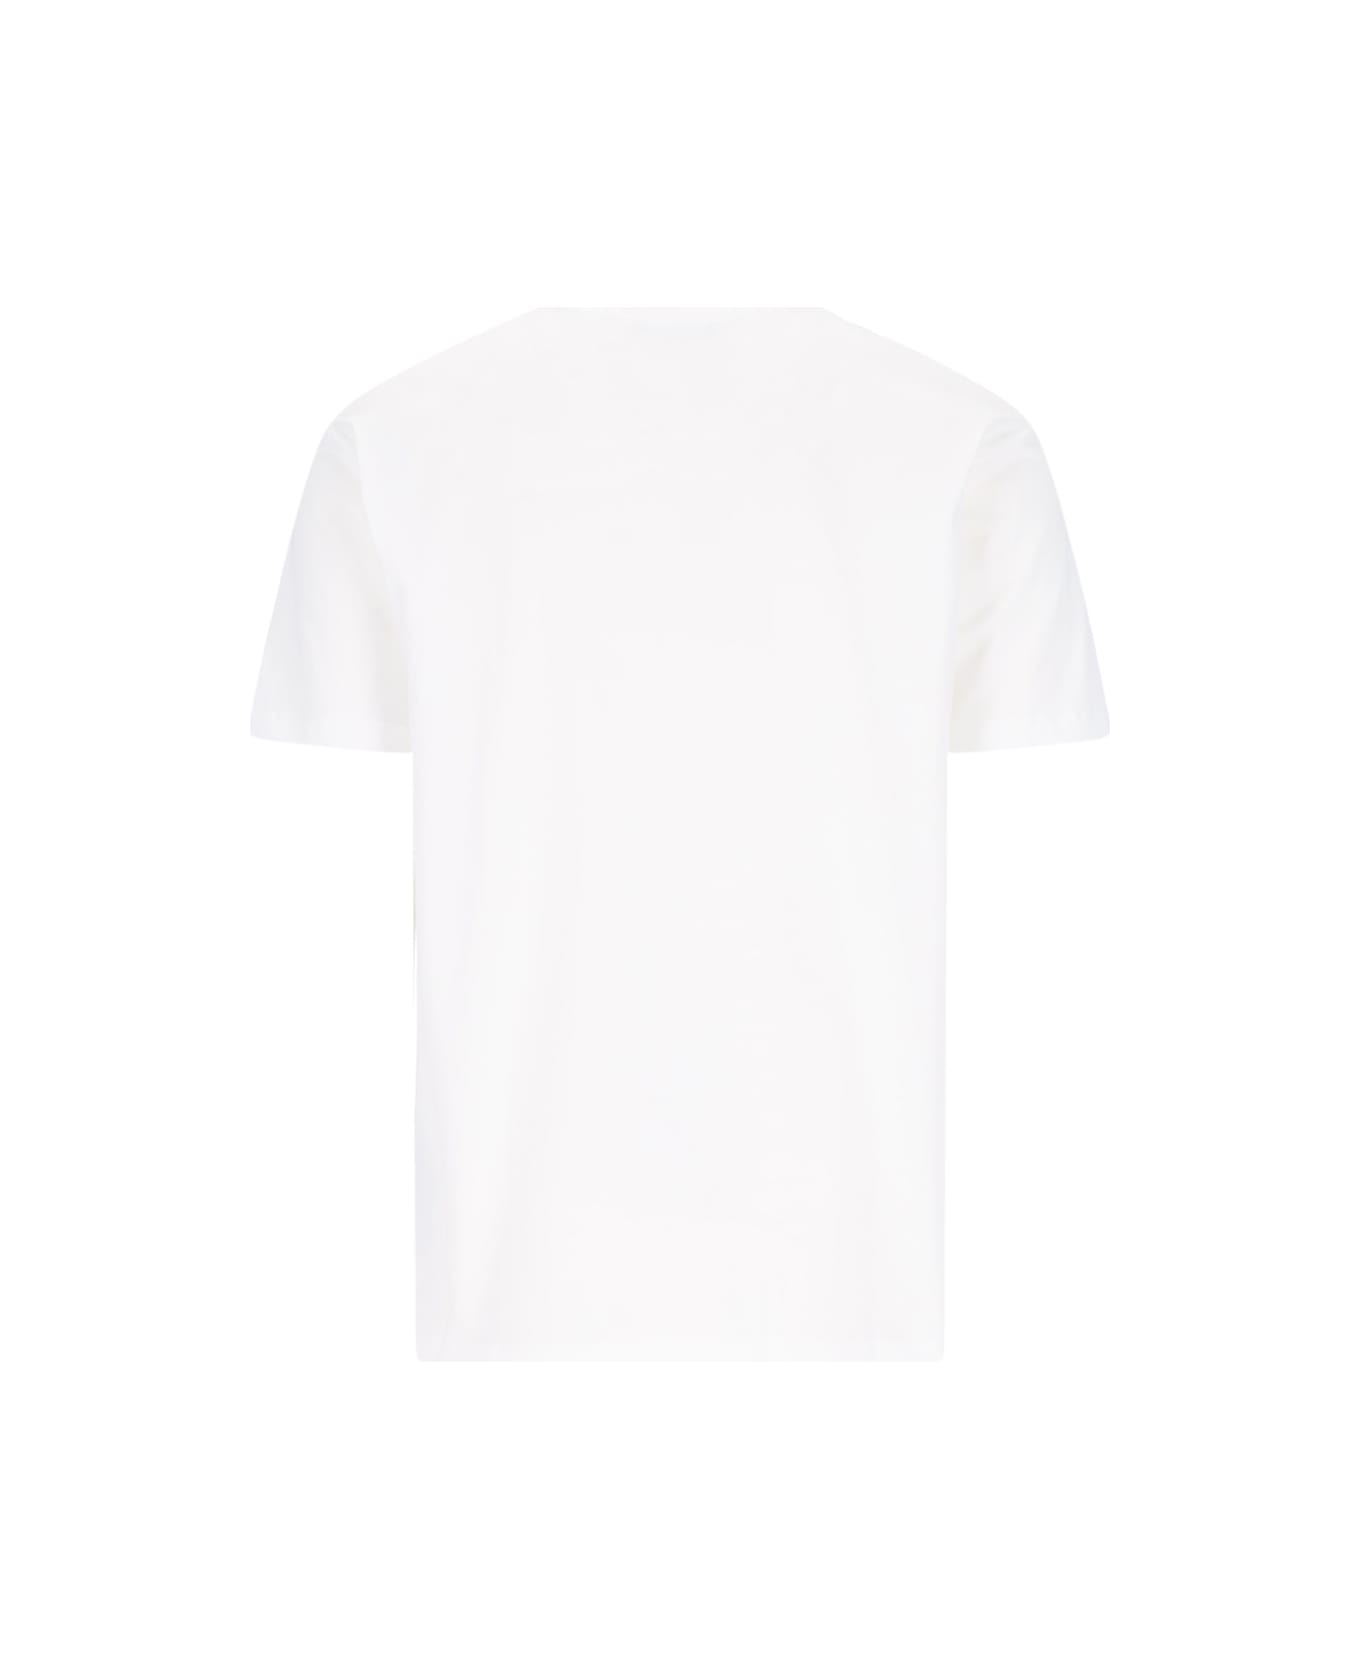 Balmain Logo T-shirt - White シャツ